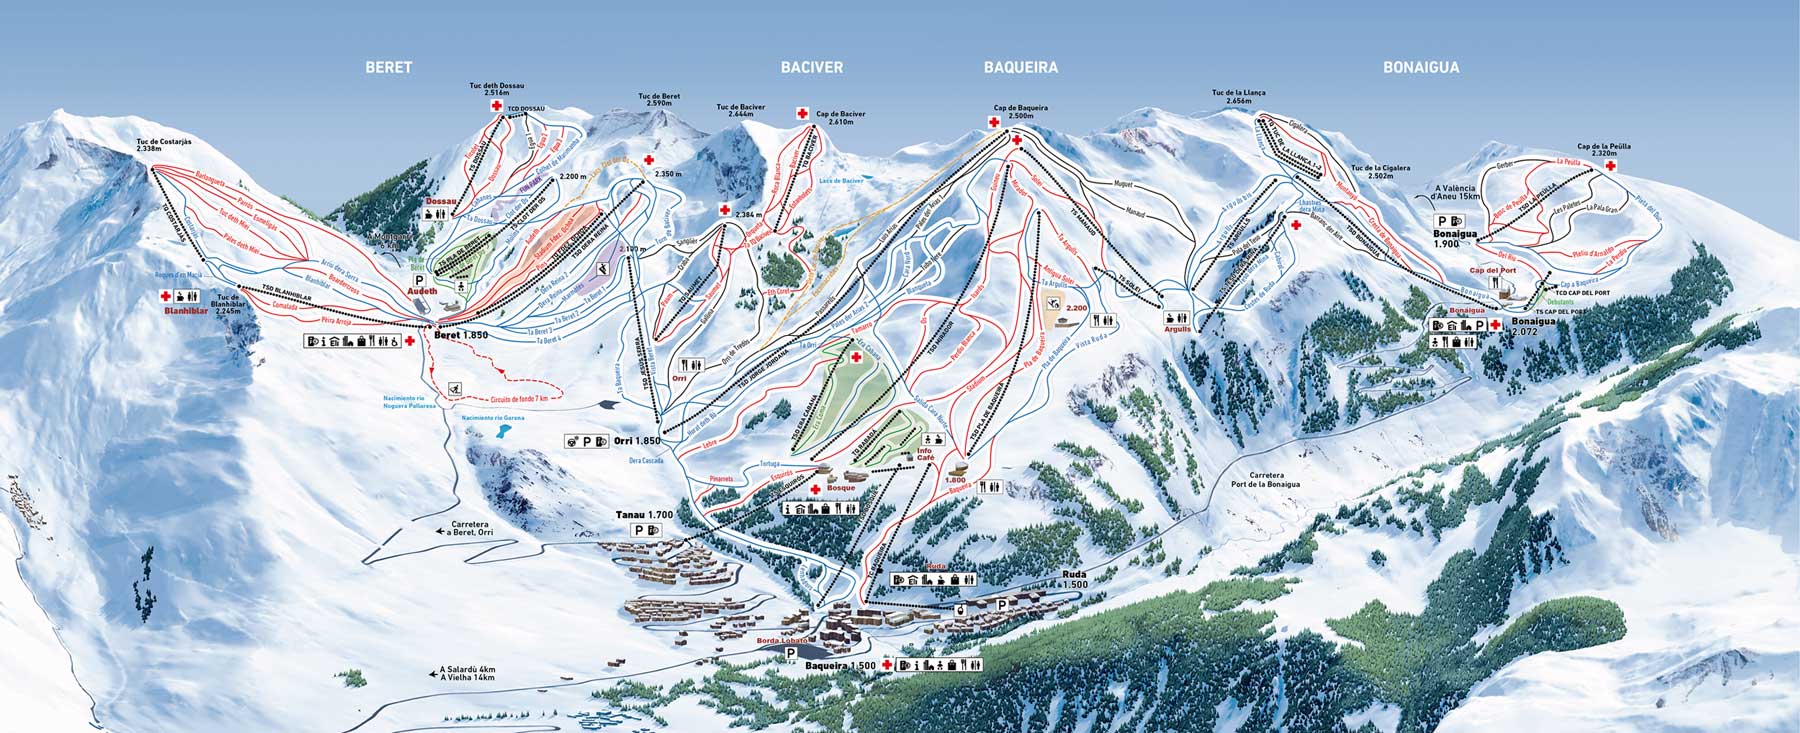 Baqueira Beret - Ski Map Piste Map